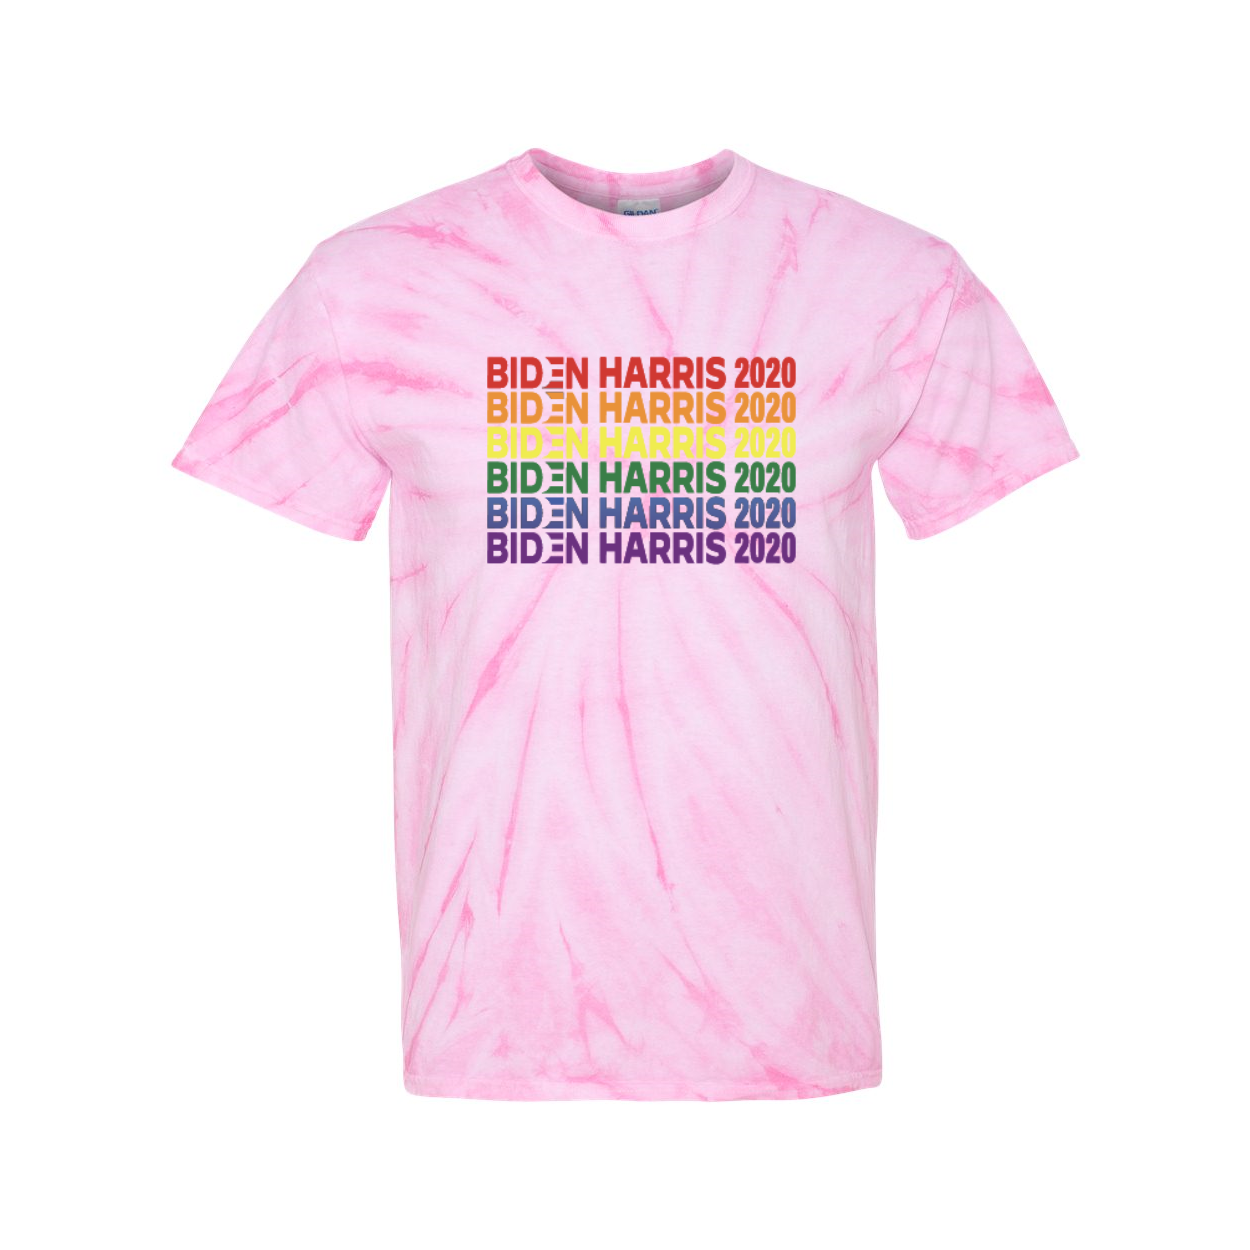 Biden Harris 2020 Pride Repeat Tie-DyeT-Shirt